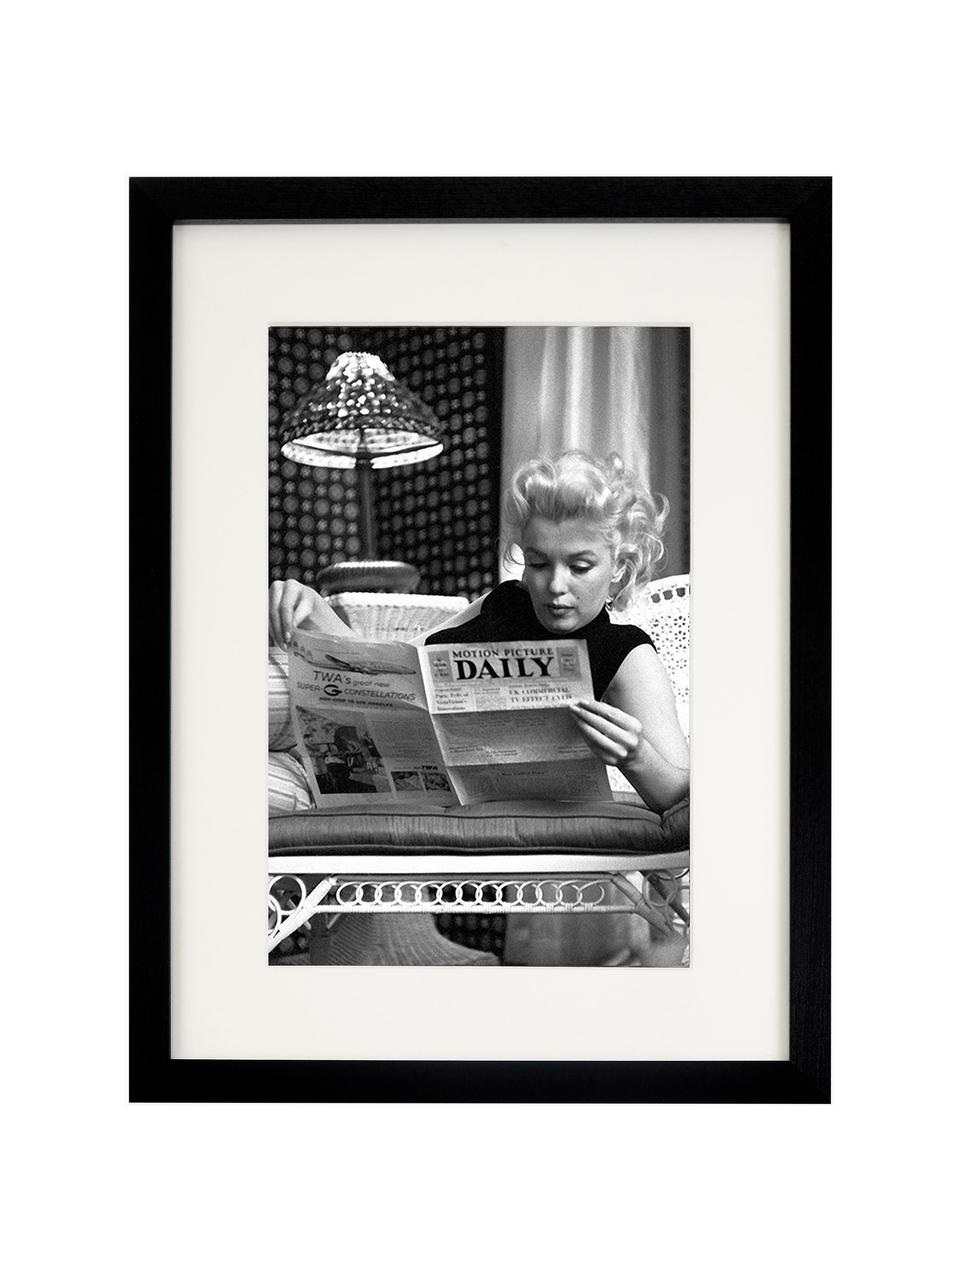 Gerahmter Digitaldruck Marilyn Monroe Reading, Bild: Digitaldruck auf Papier, , Rahmen: Holz, lackiert, Front: Plexiglas, Marilyn Monroe Reading, B 33 x H 43 cm